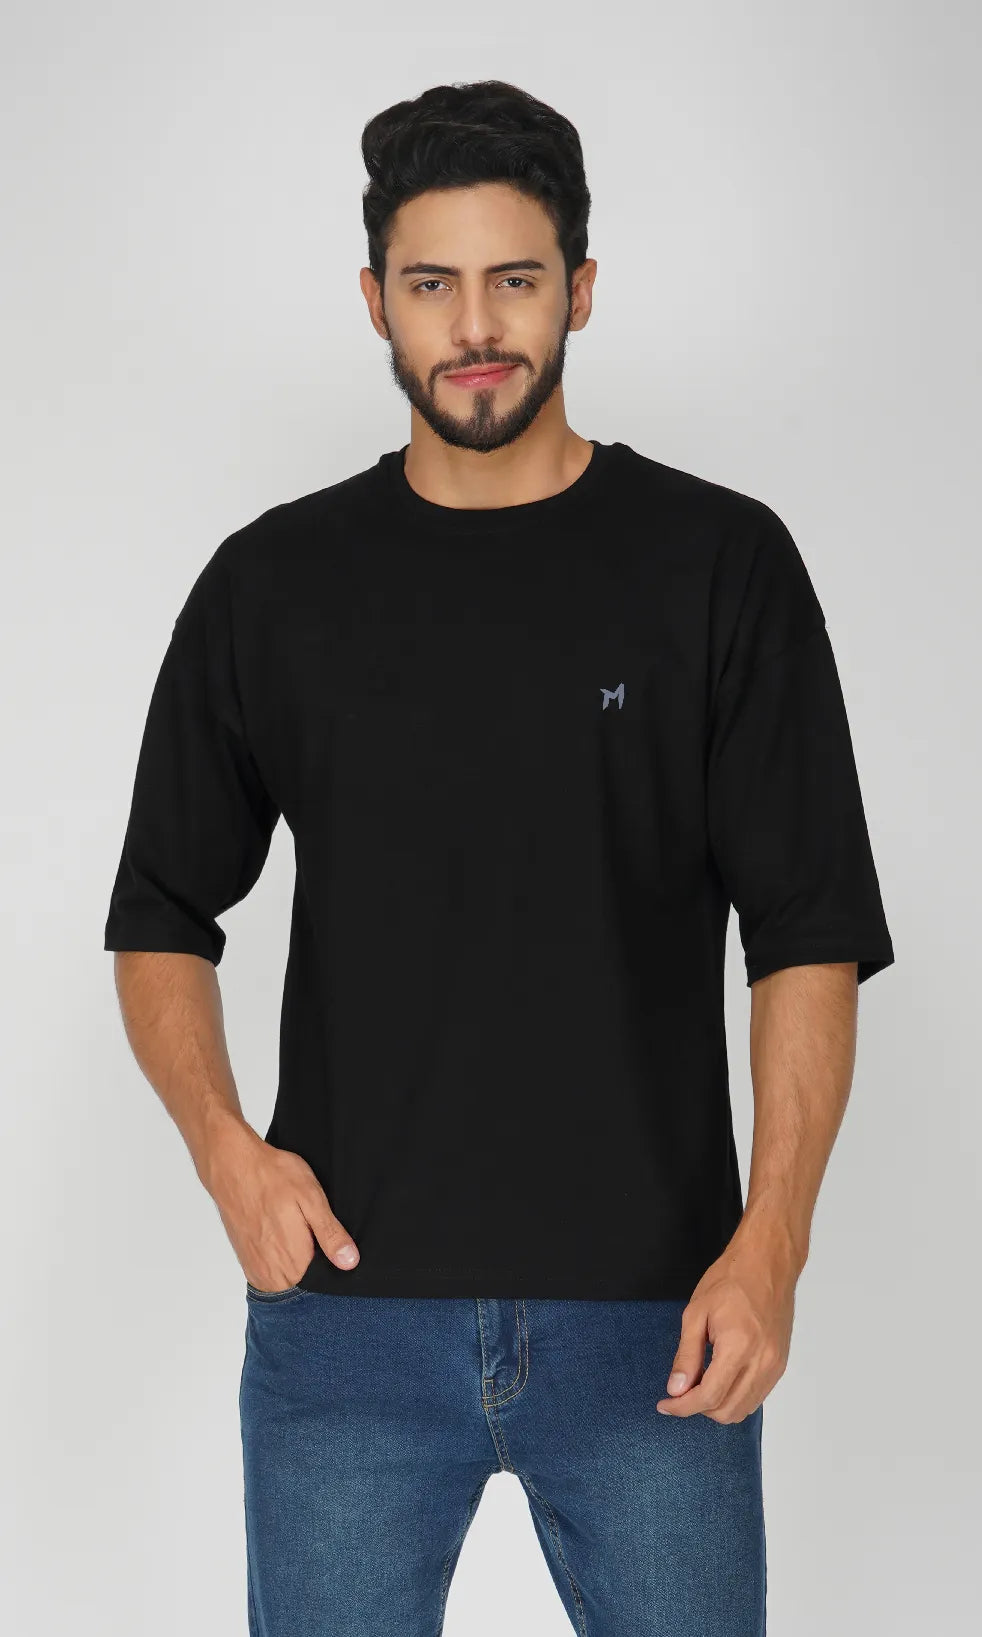 Mebadass Cotton Men's OverSized/Baggy Dropshoulder T-shirts - Black